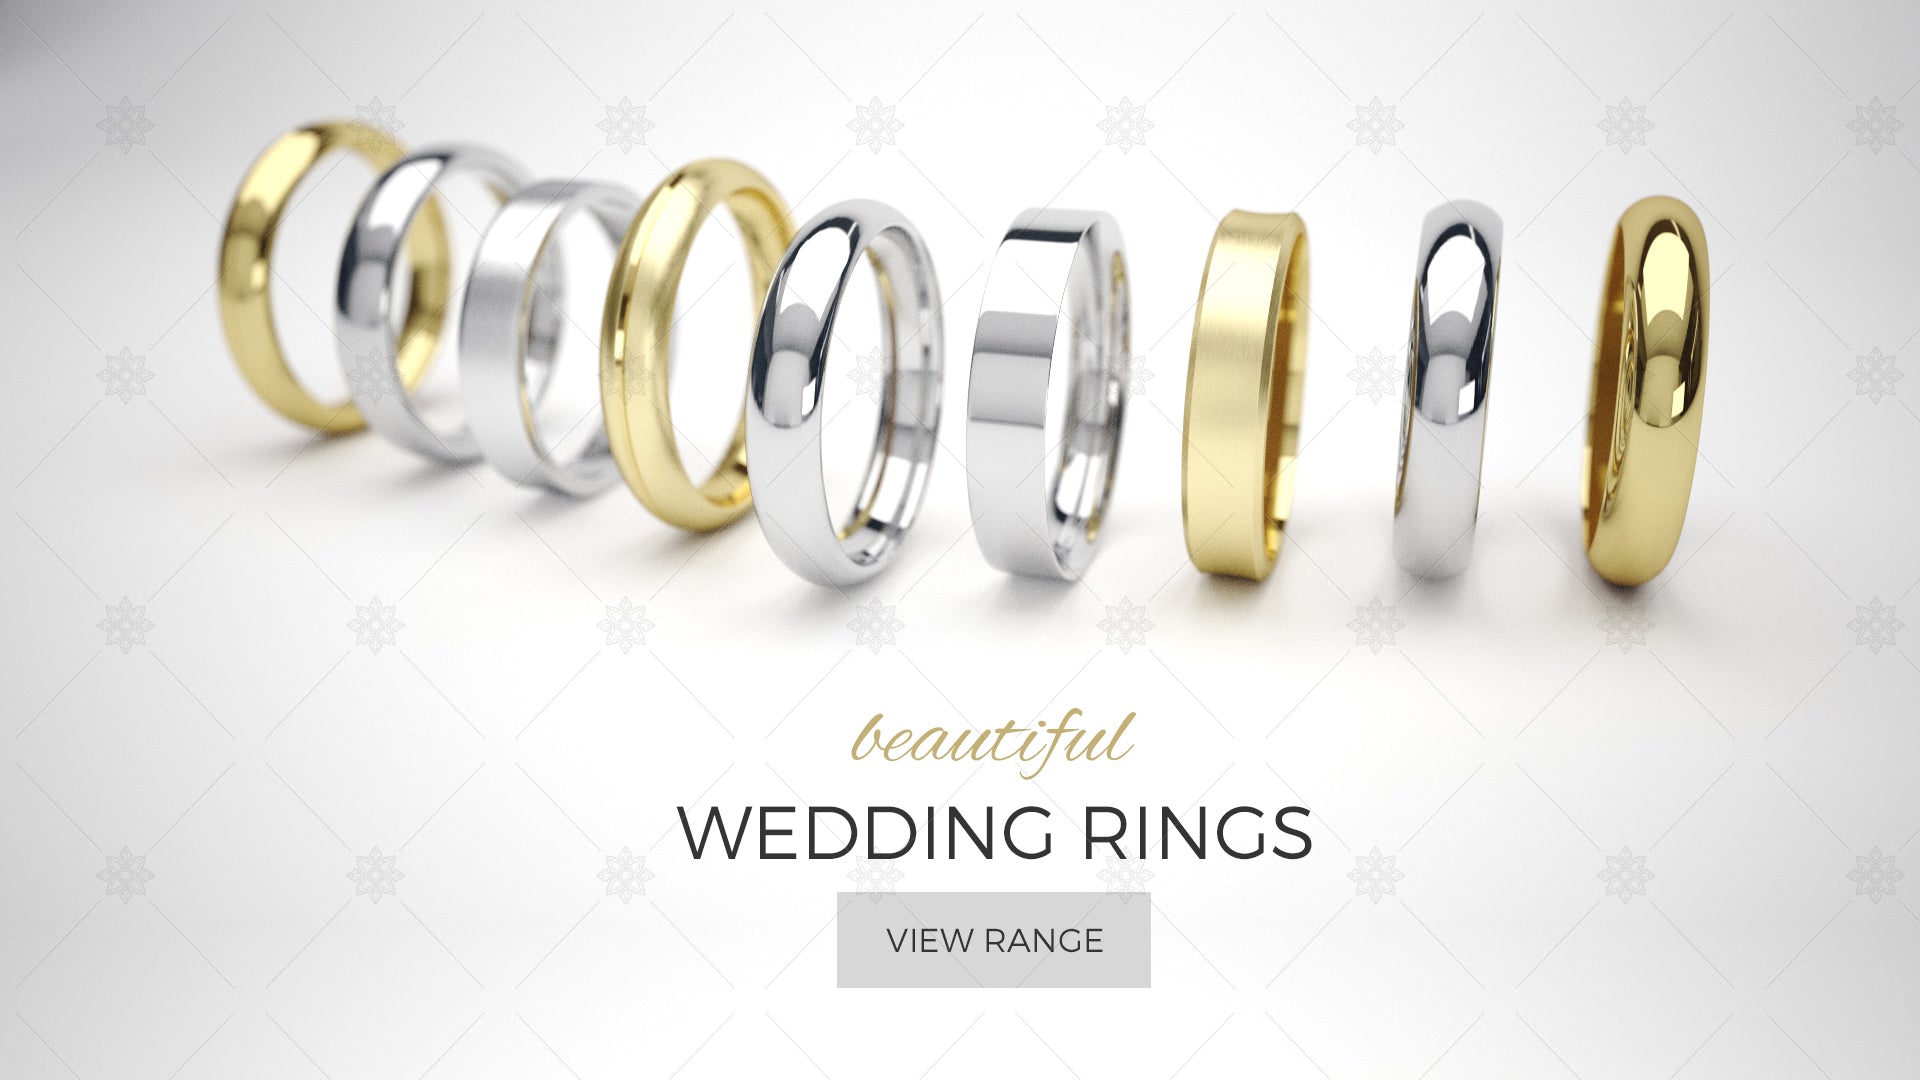 Wedding ring website banner design